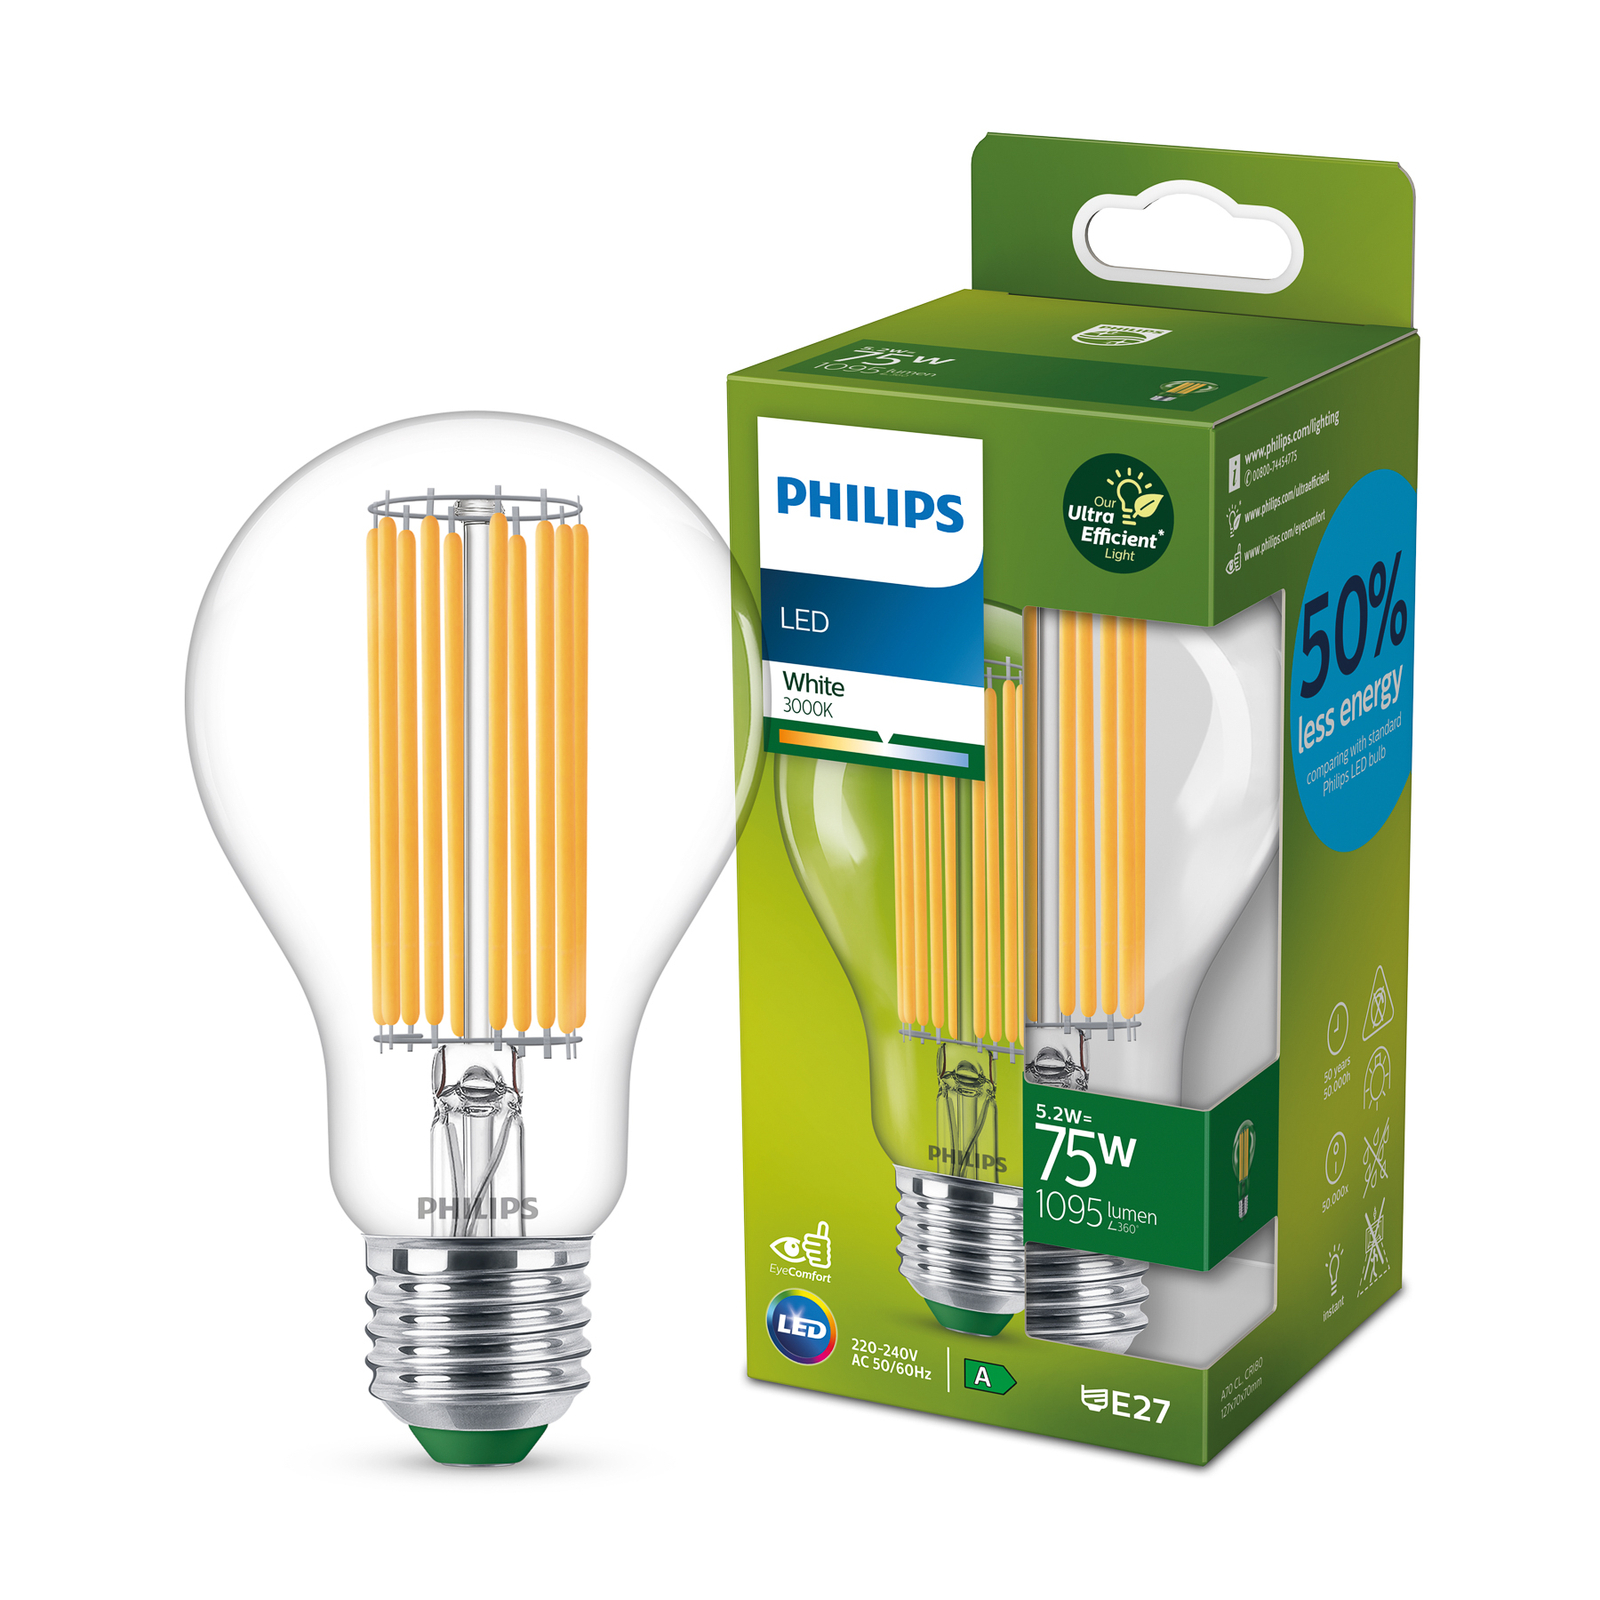 Philips LED bulb E27 A70 5.2W 1,095lm clear 3,000K